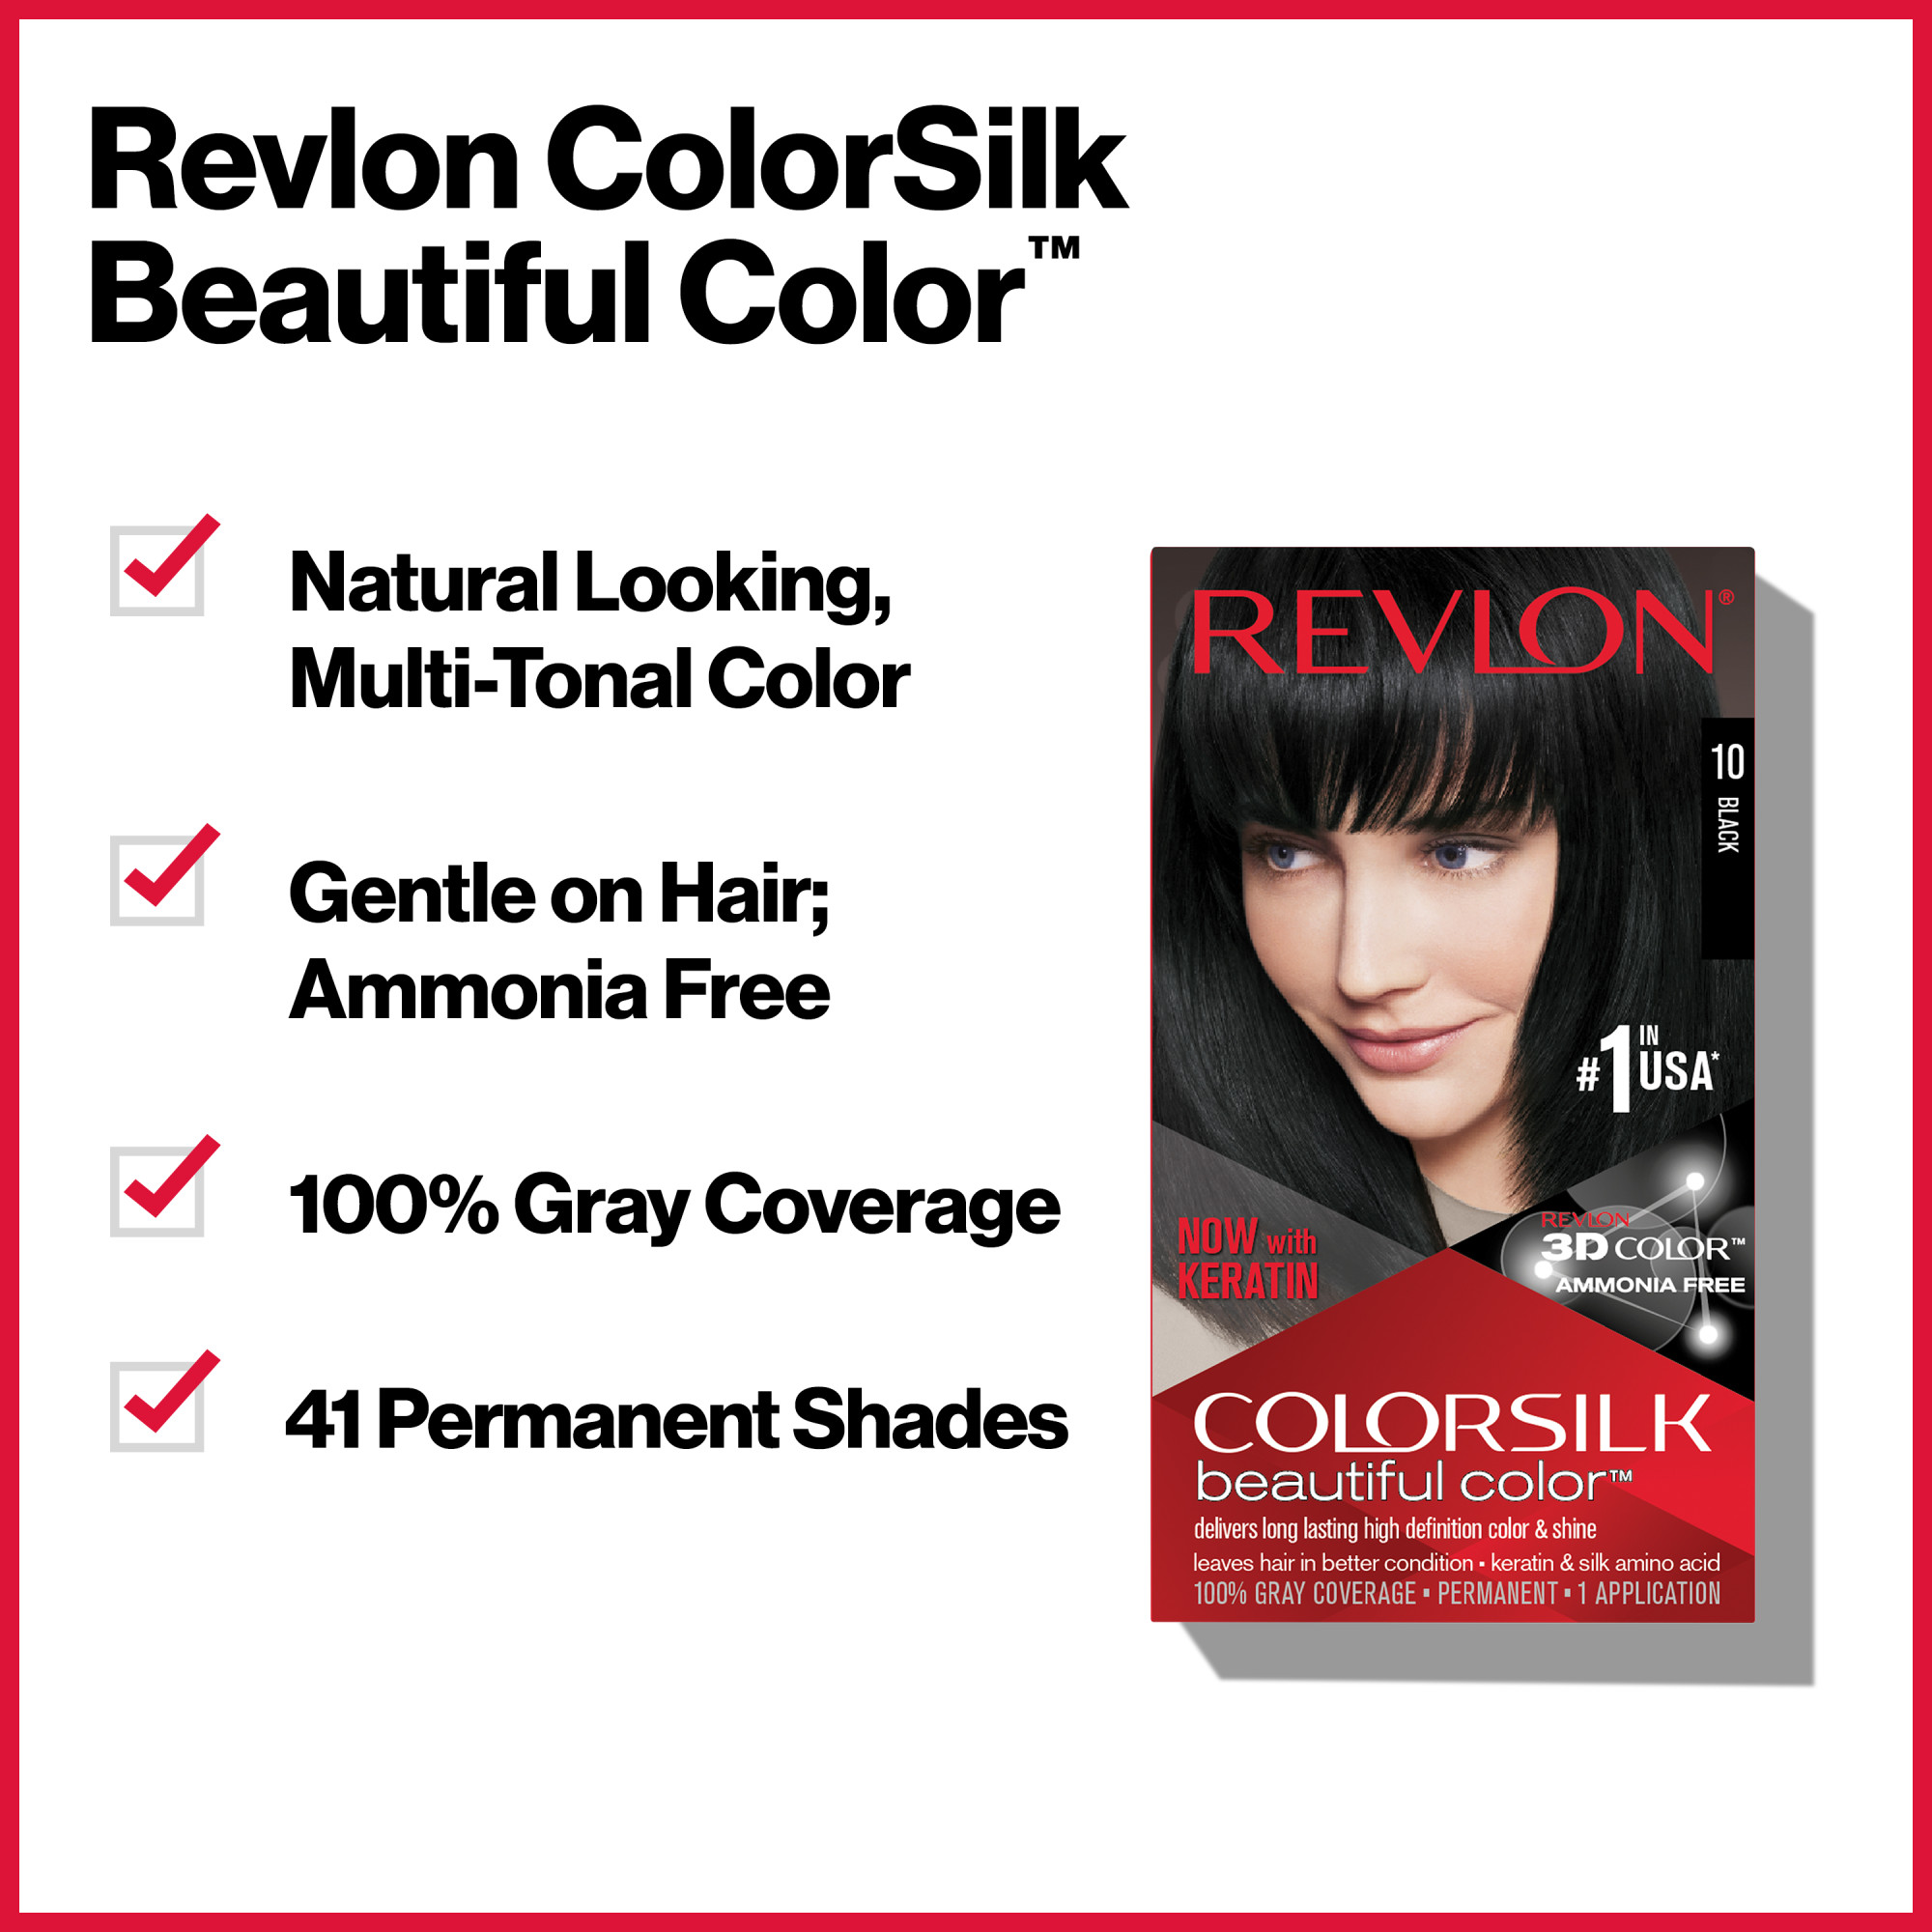 Revlon ColorSilk Beautiful Color Permanent Hair Color, 74 Medium Blonde, 1 Count - image 5 of 14